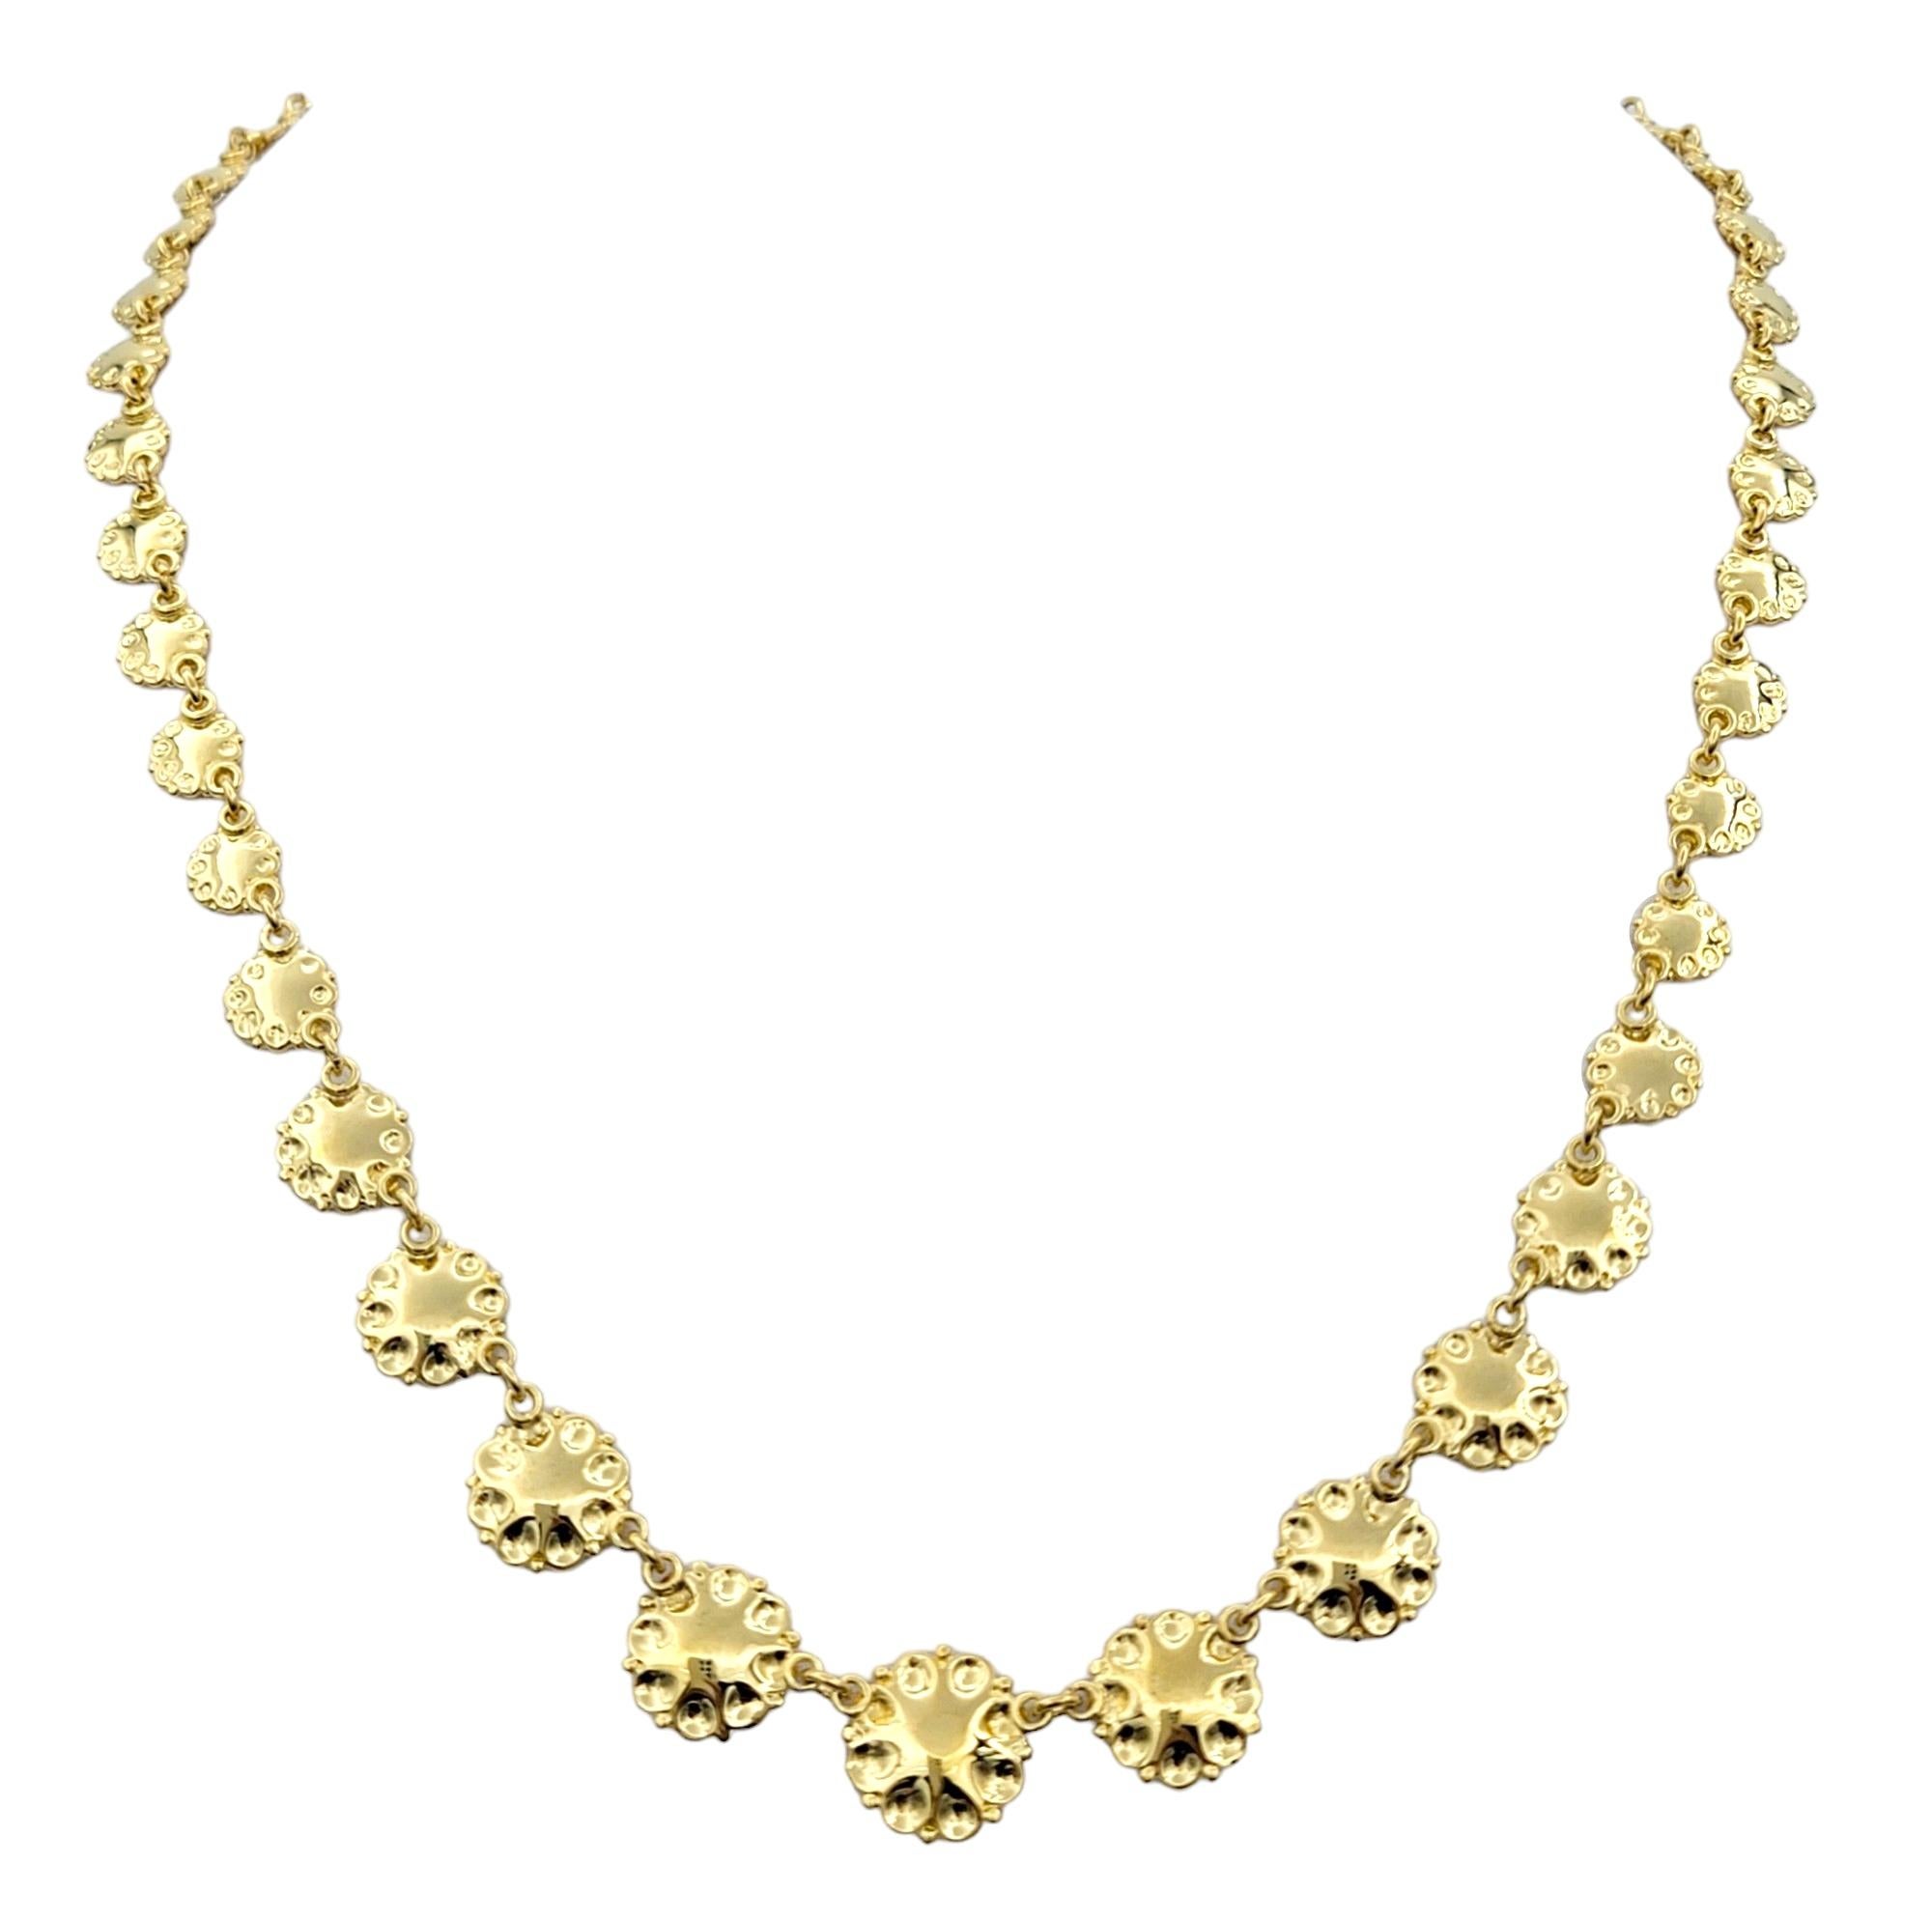 Women's Graduated Flower Design Textured Link Necklace Set in 18 Karat Yellow Gold For Sale